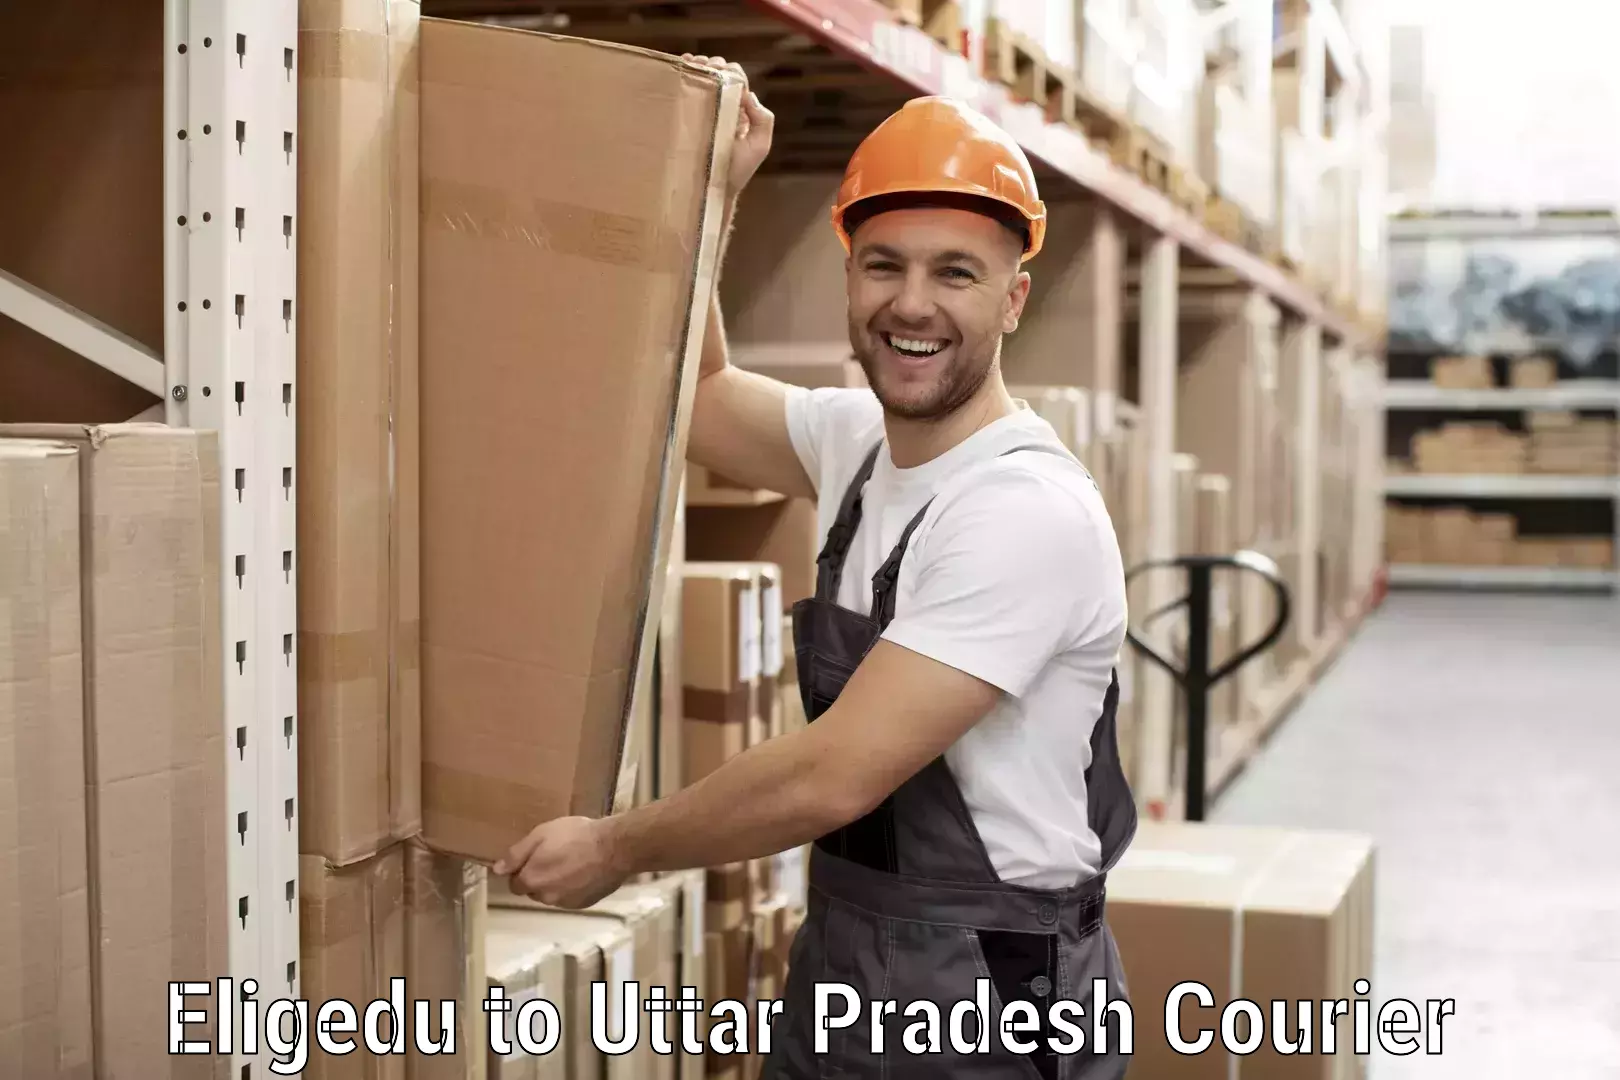 Urban courier service Eligedu to Mahasi